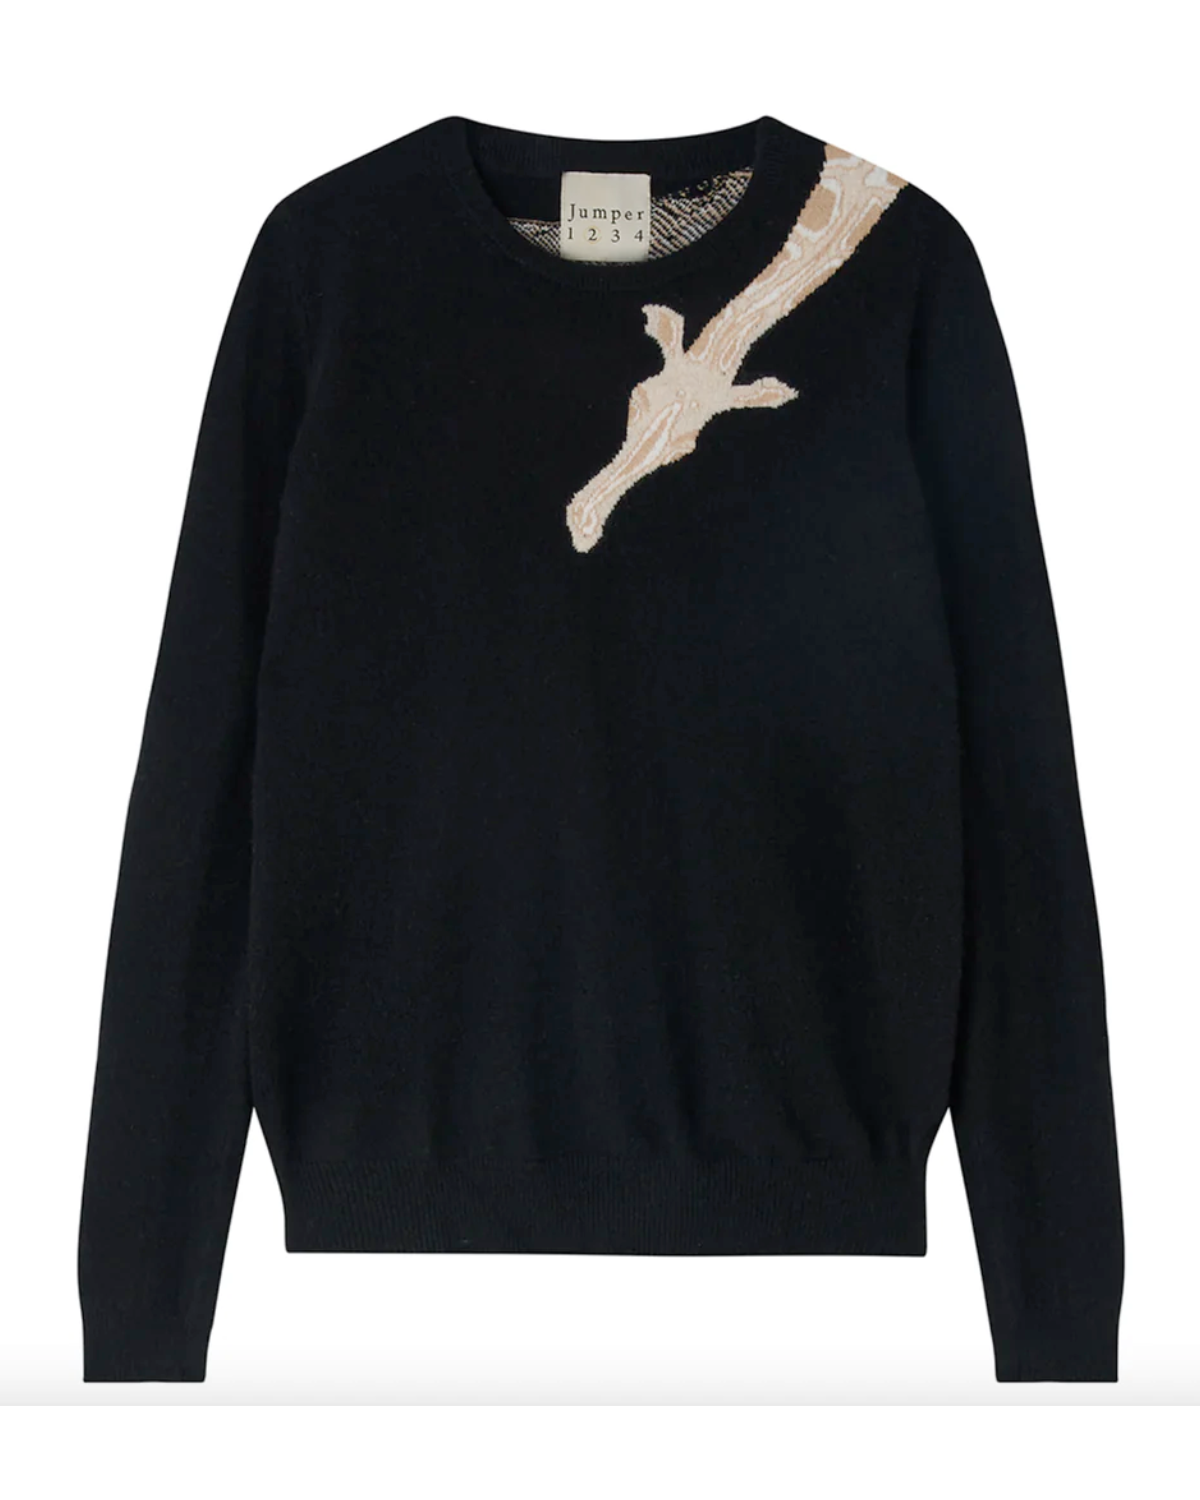 Giraffe Crewneck Sweater (Black)